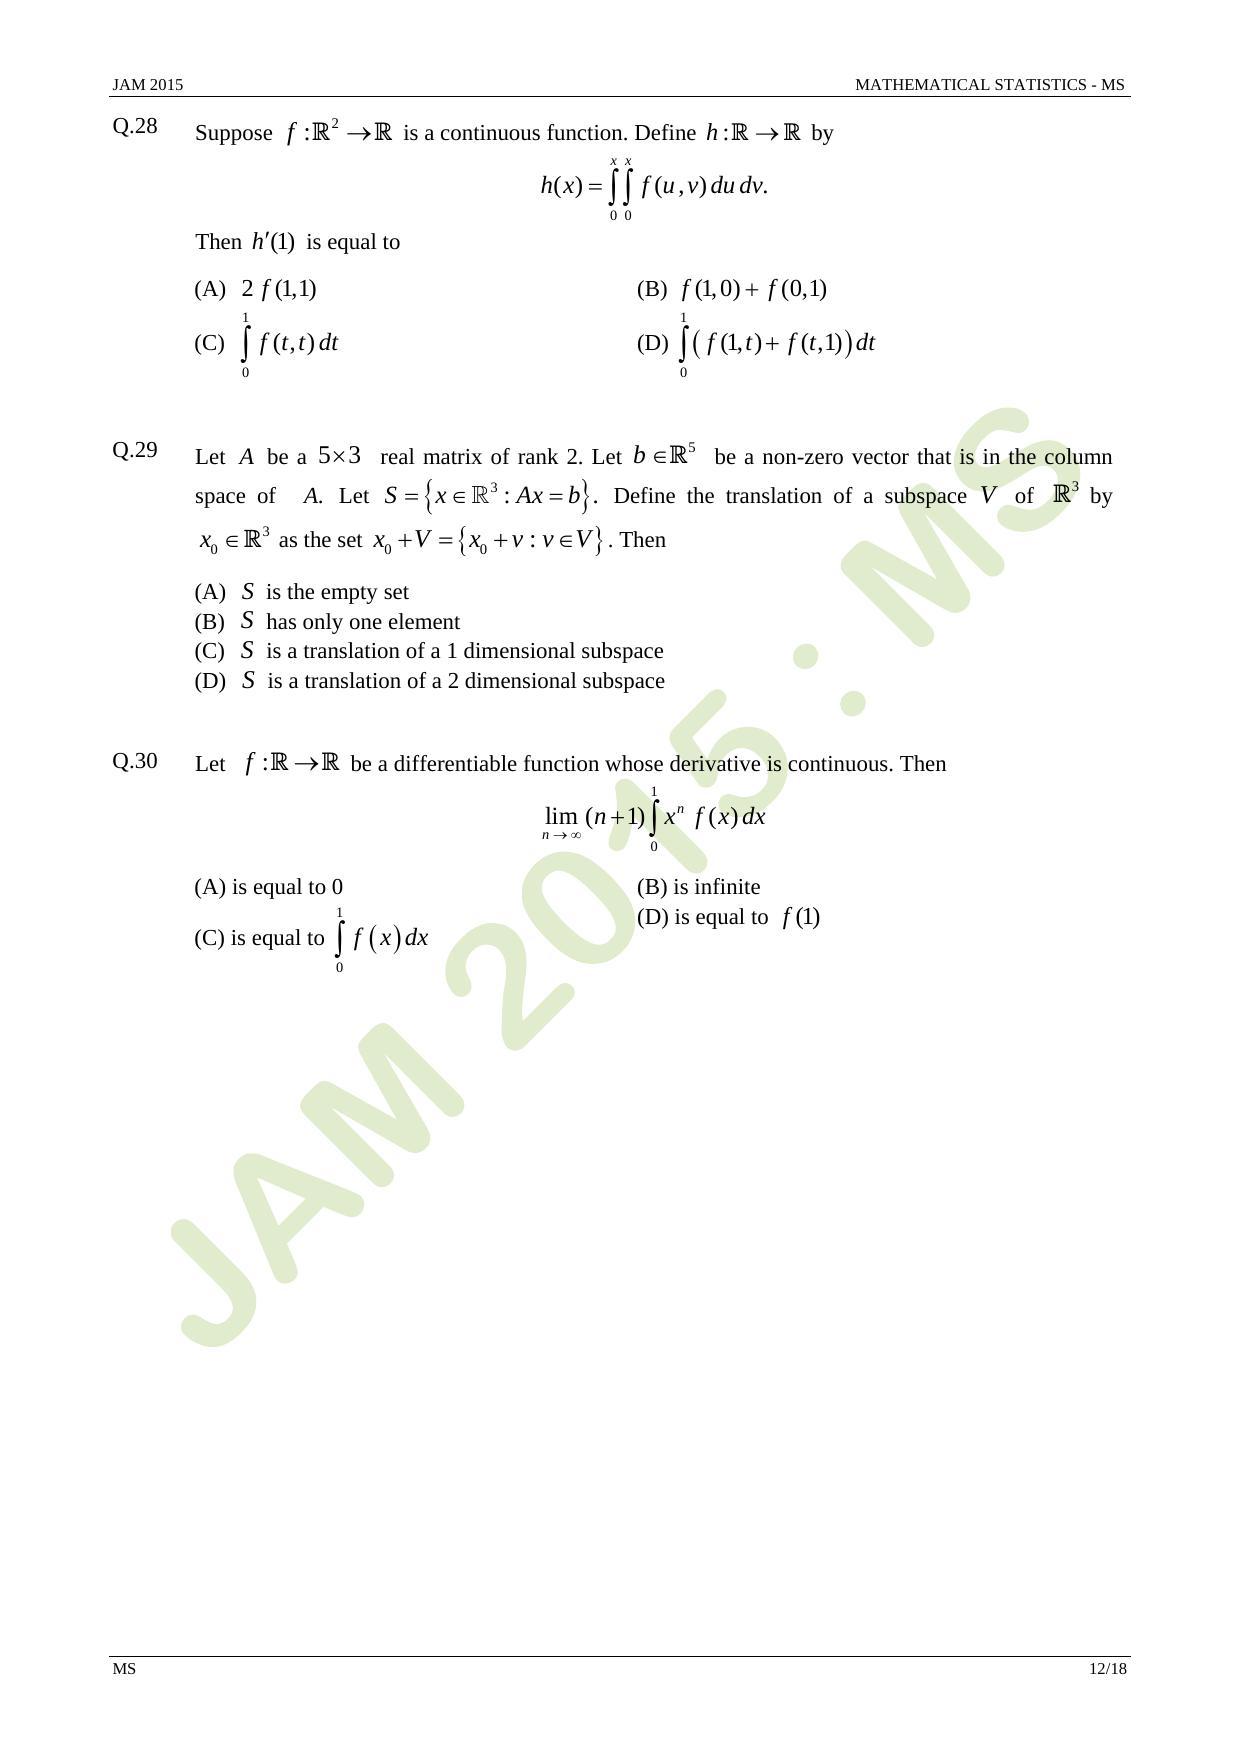 JAM 2015: MS Question Paper - Page 12